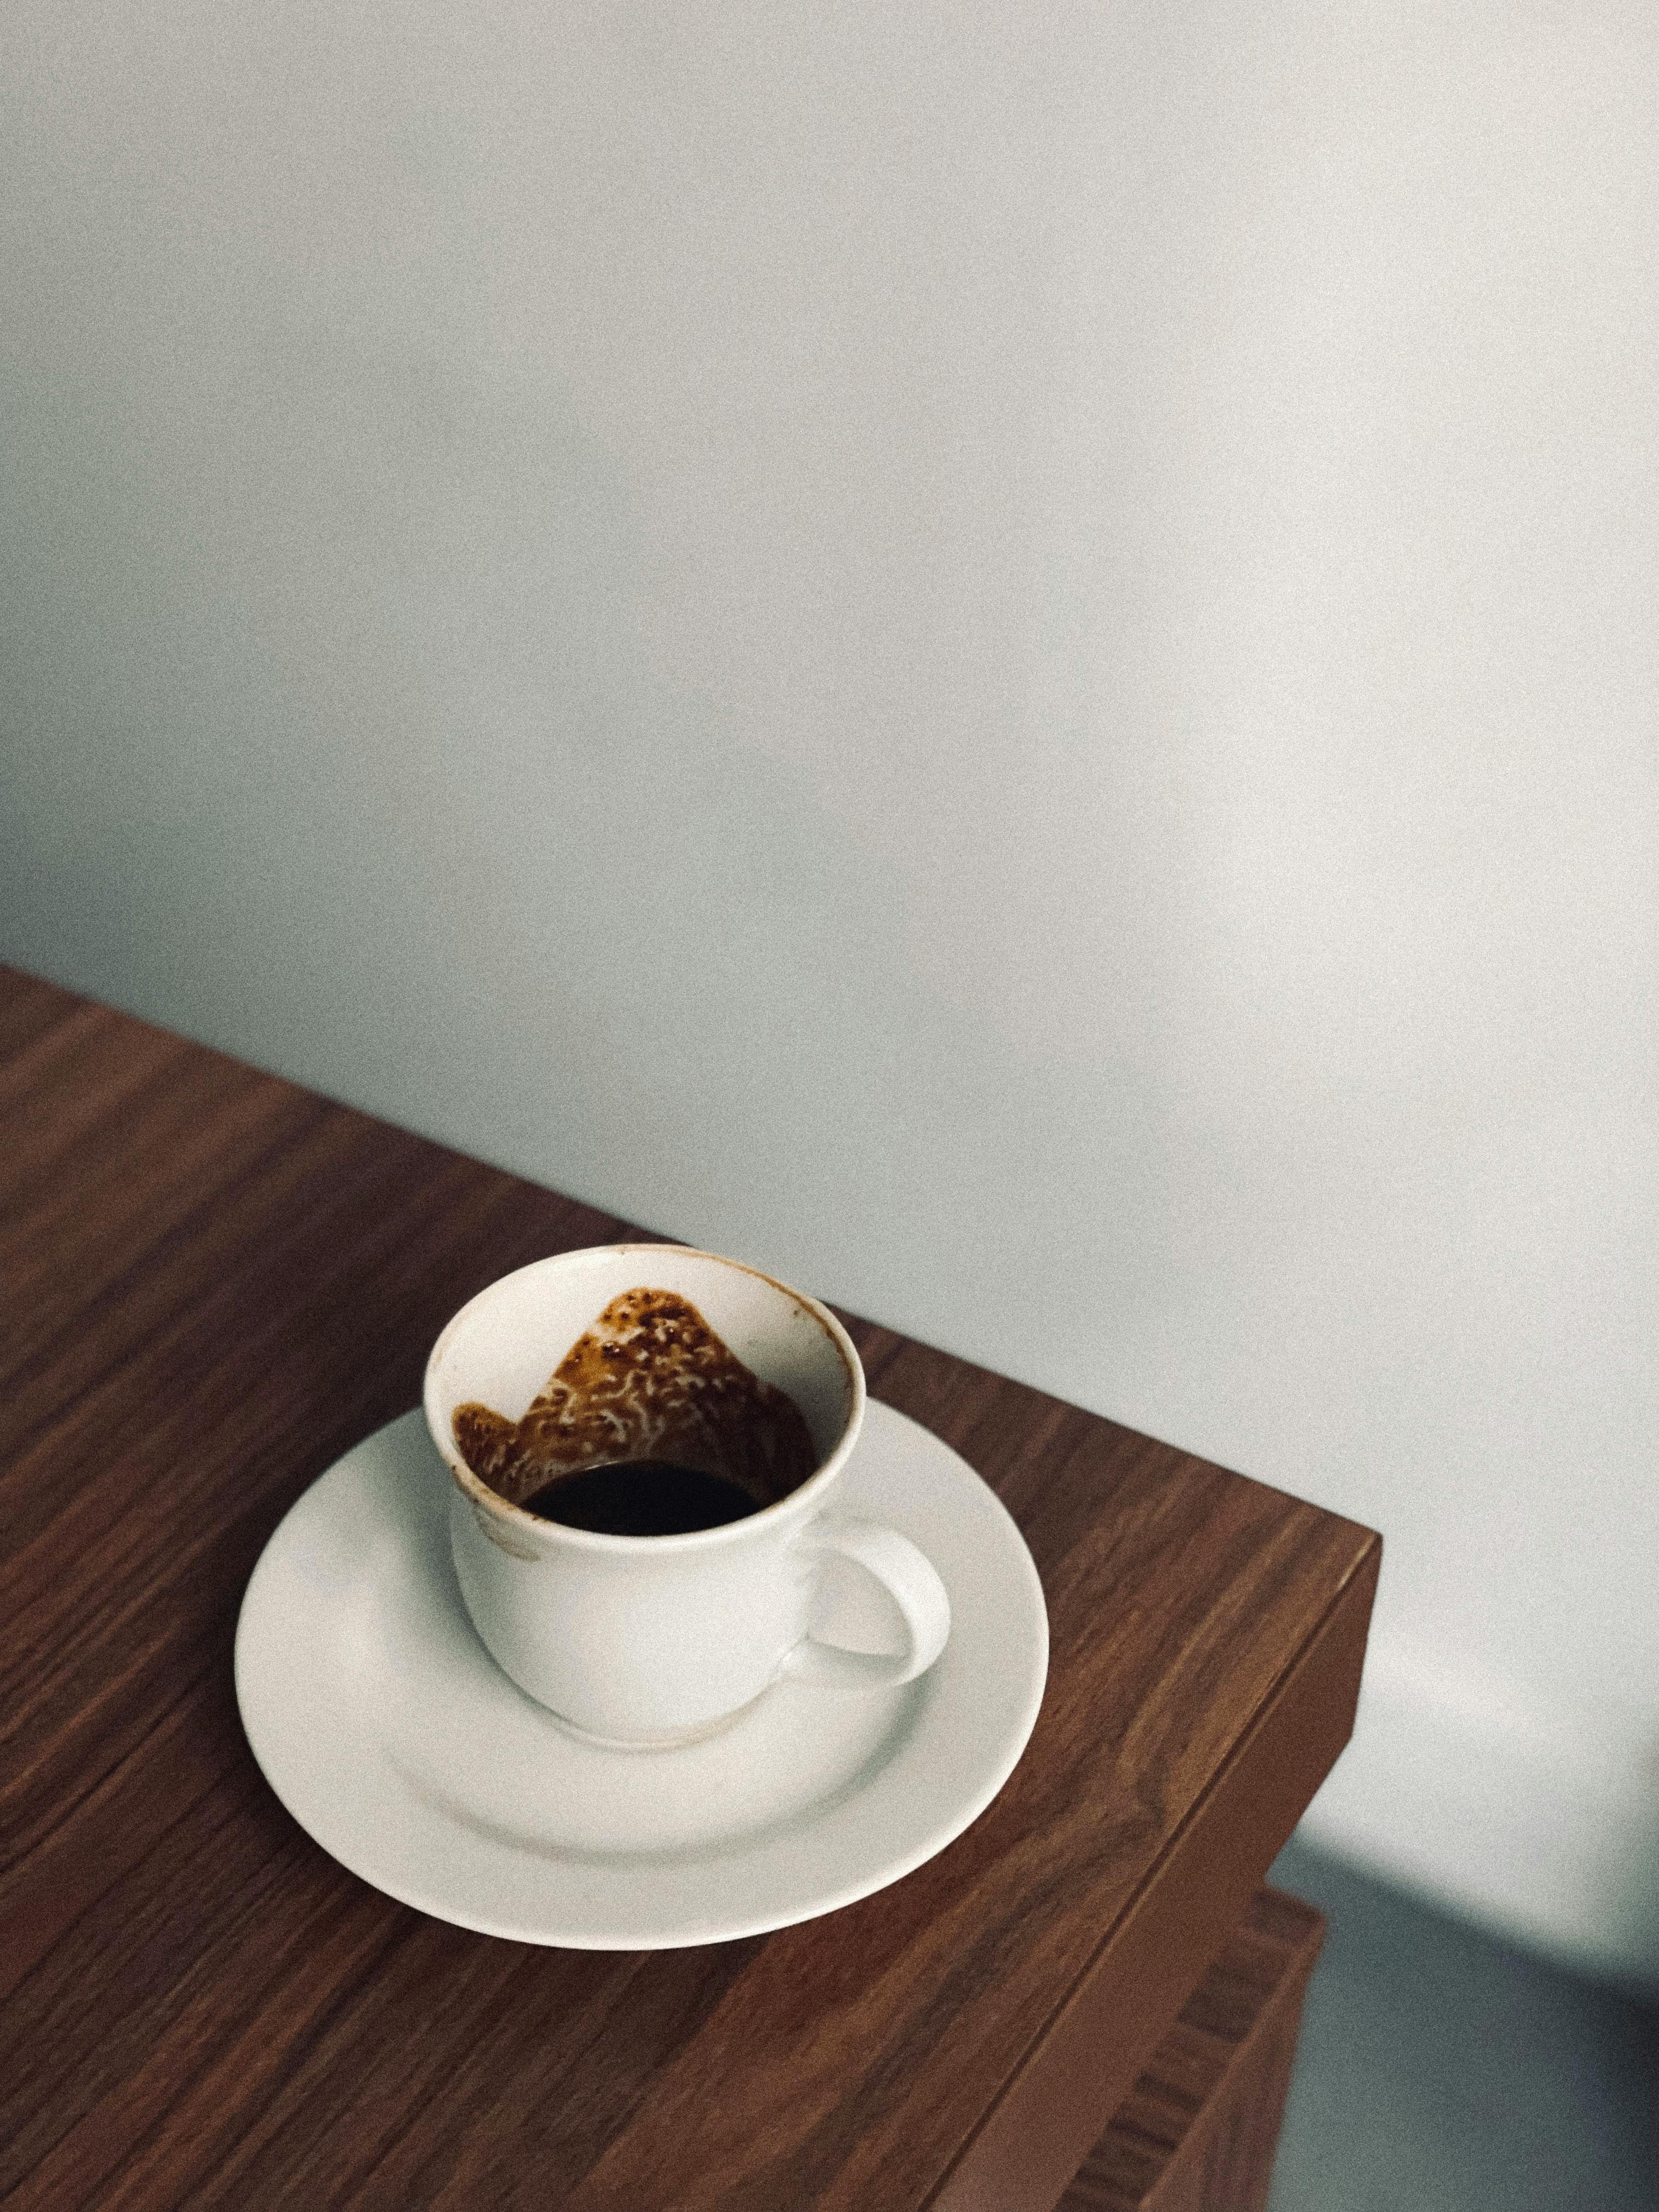 Does Coffee Liqueur Have Caffeine?